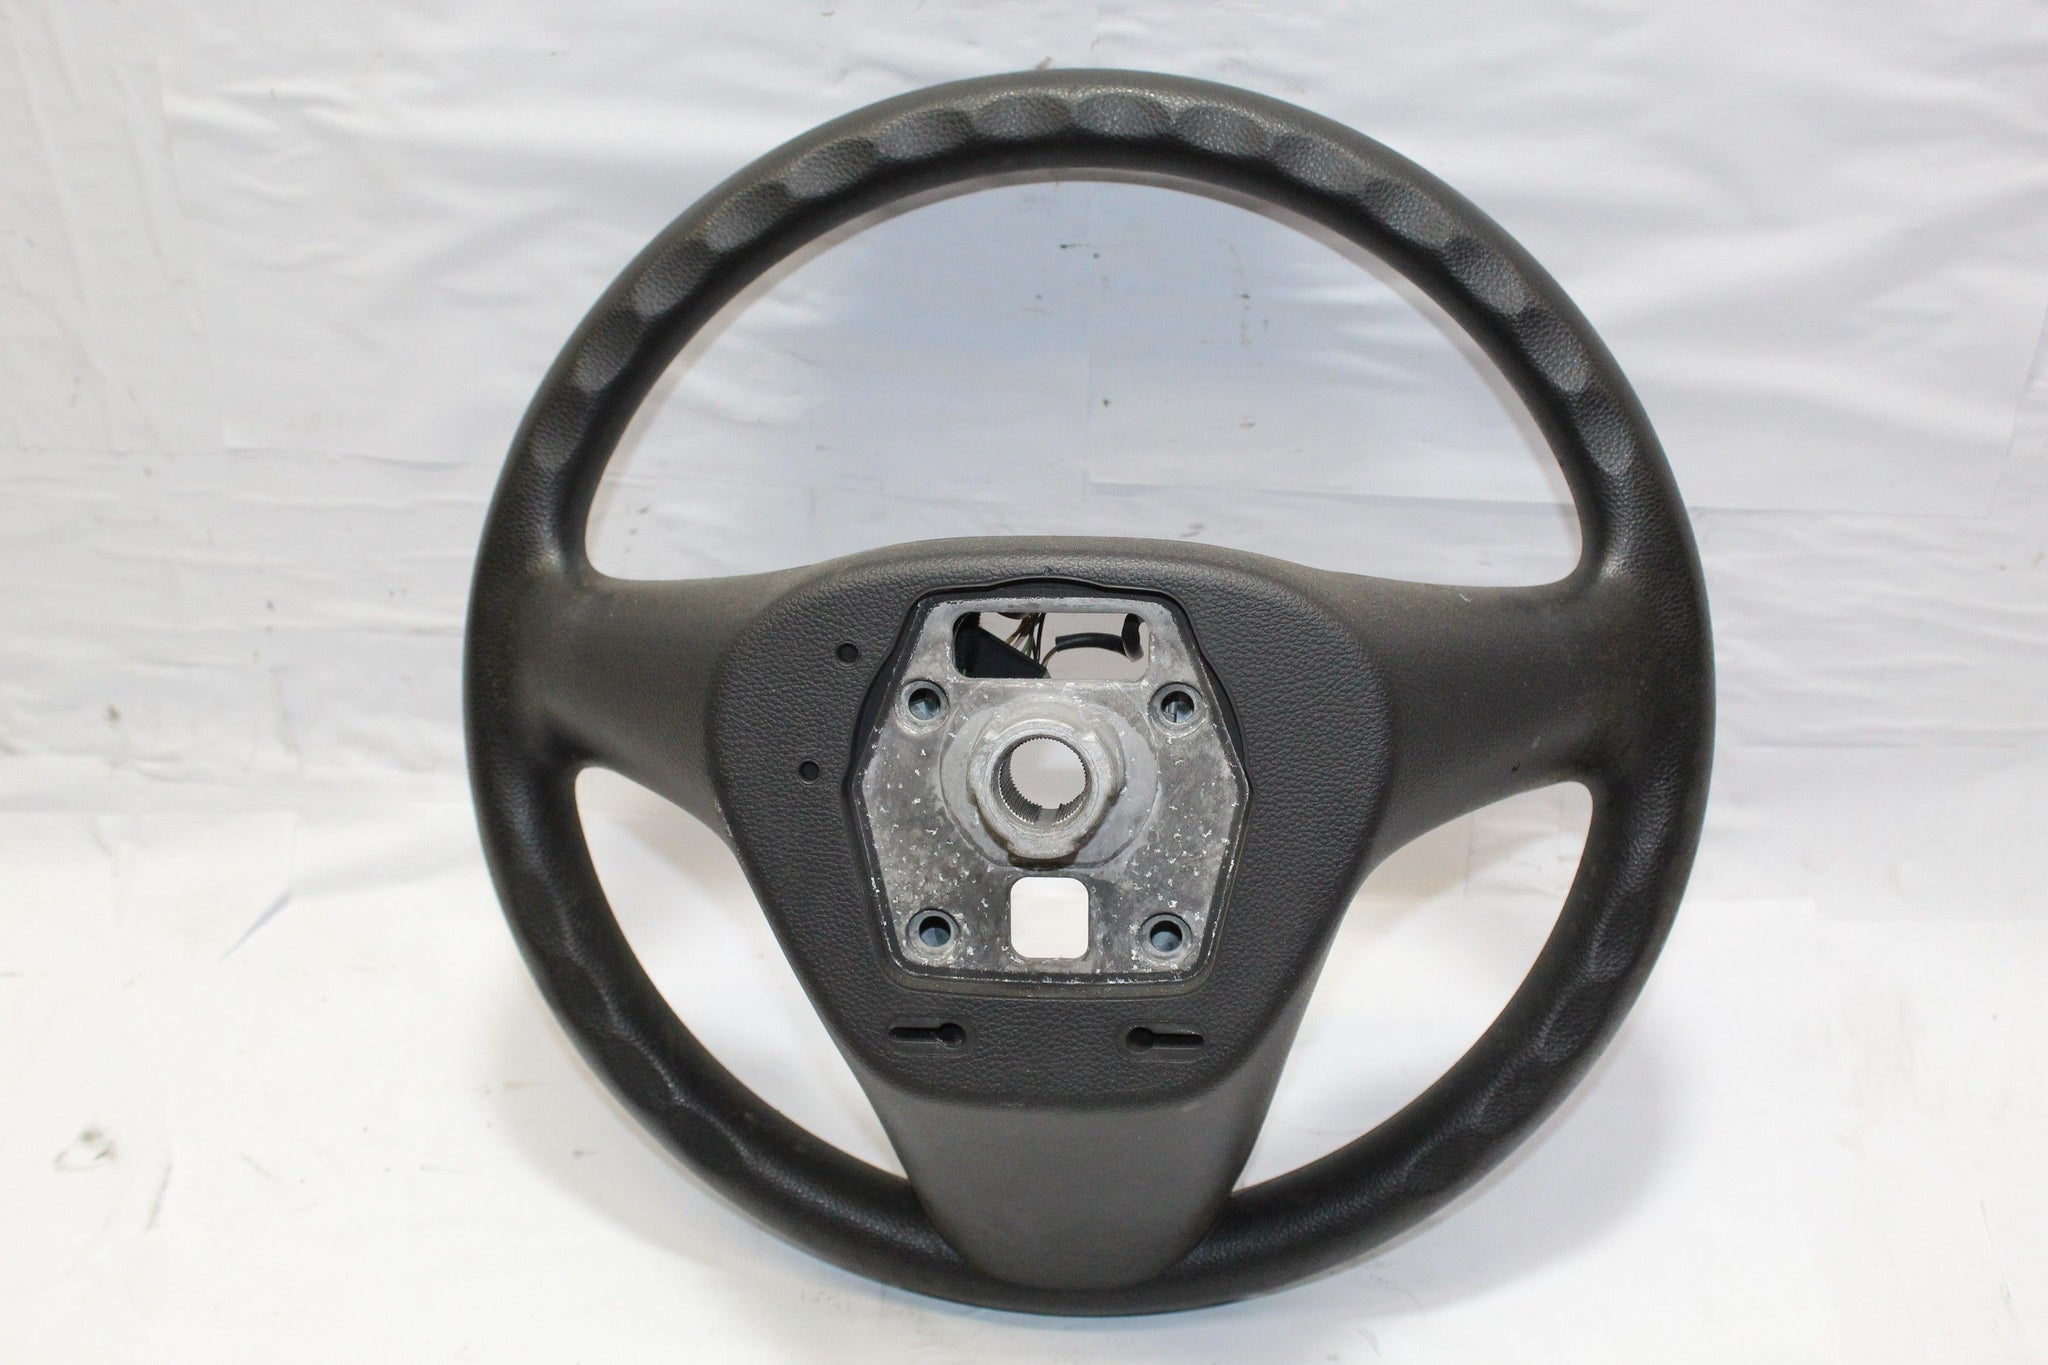 2012 VAUXHALL MERIVA Steering Wheel with Multifunction 13351023